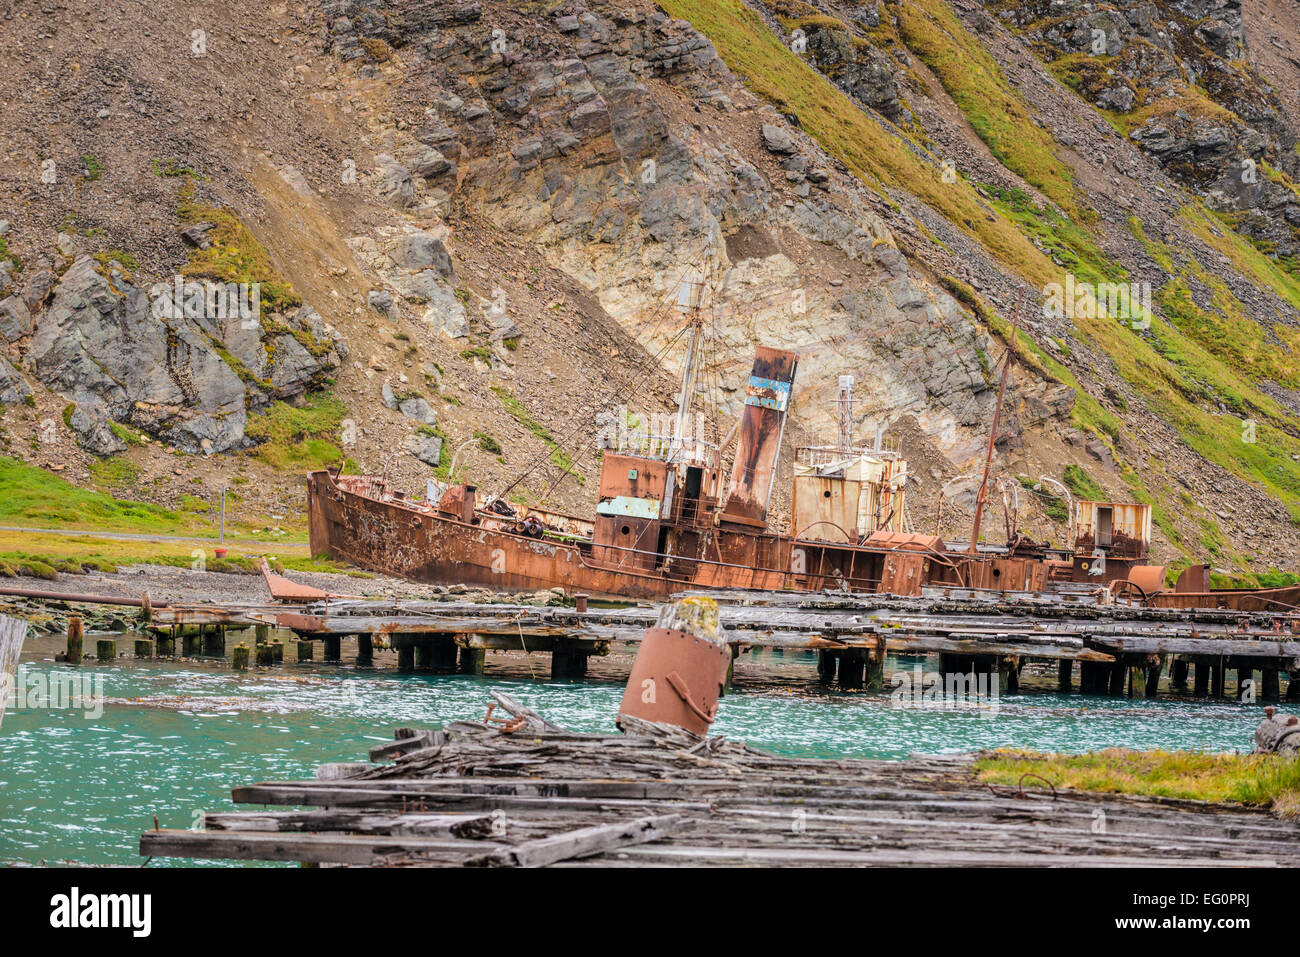 Rosten Walfang-Schiff in Grytviken Walfang-Station, Südgeorgien, Antarktis Stockfoto